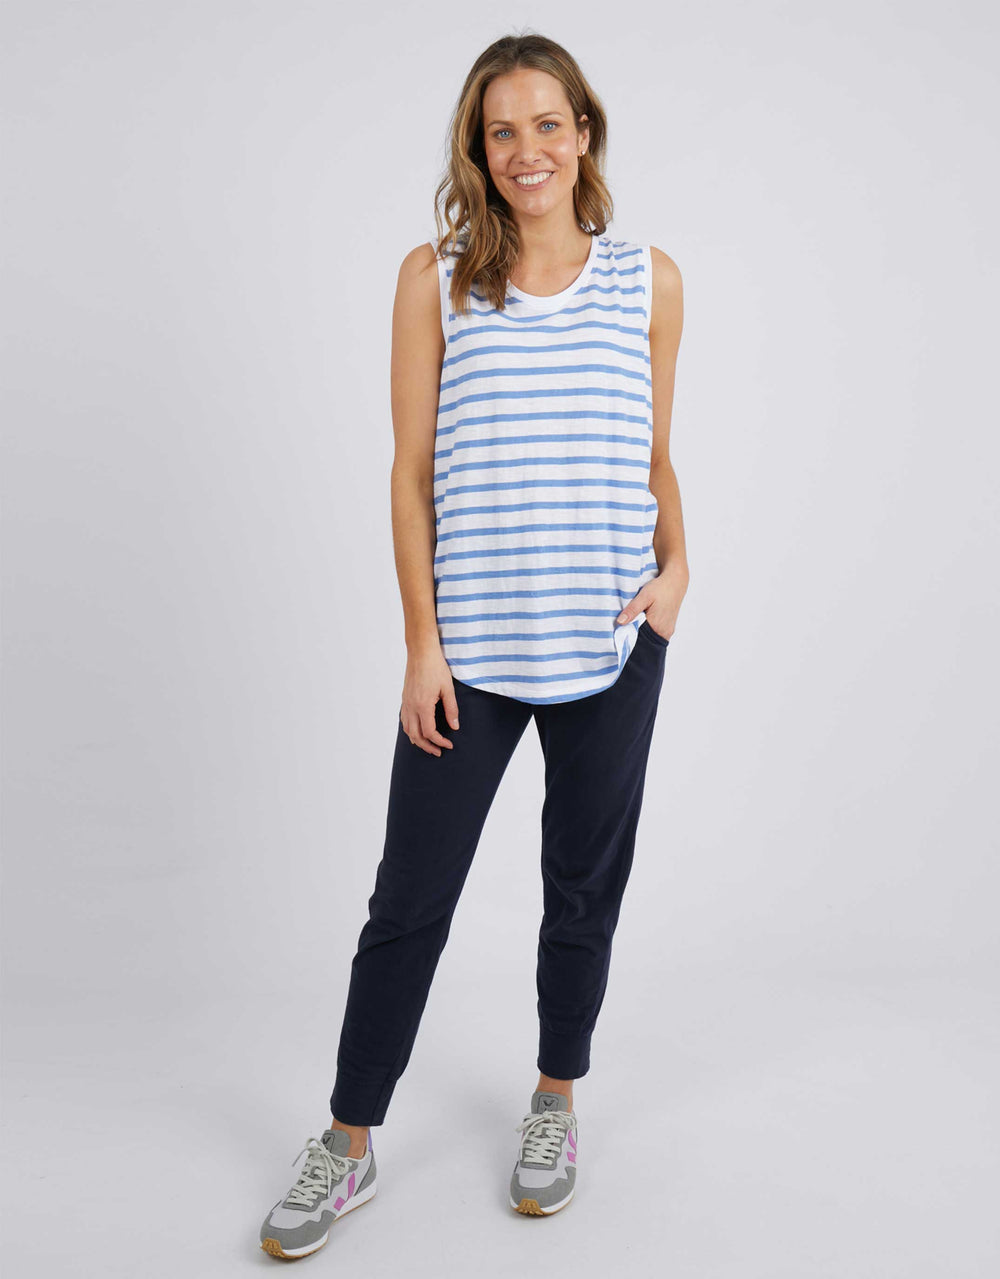 elm-embrace-plus-size-scoop-tank-cornflower-blue-white-stripe-womens-clothing